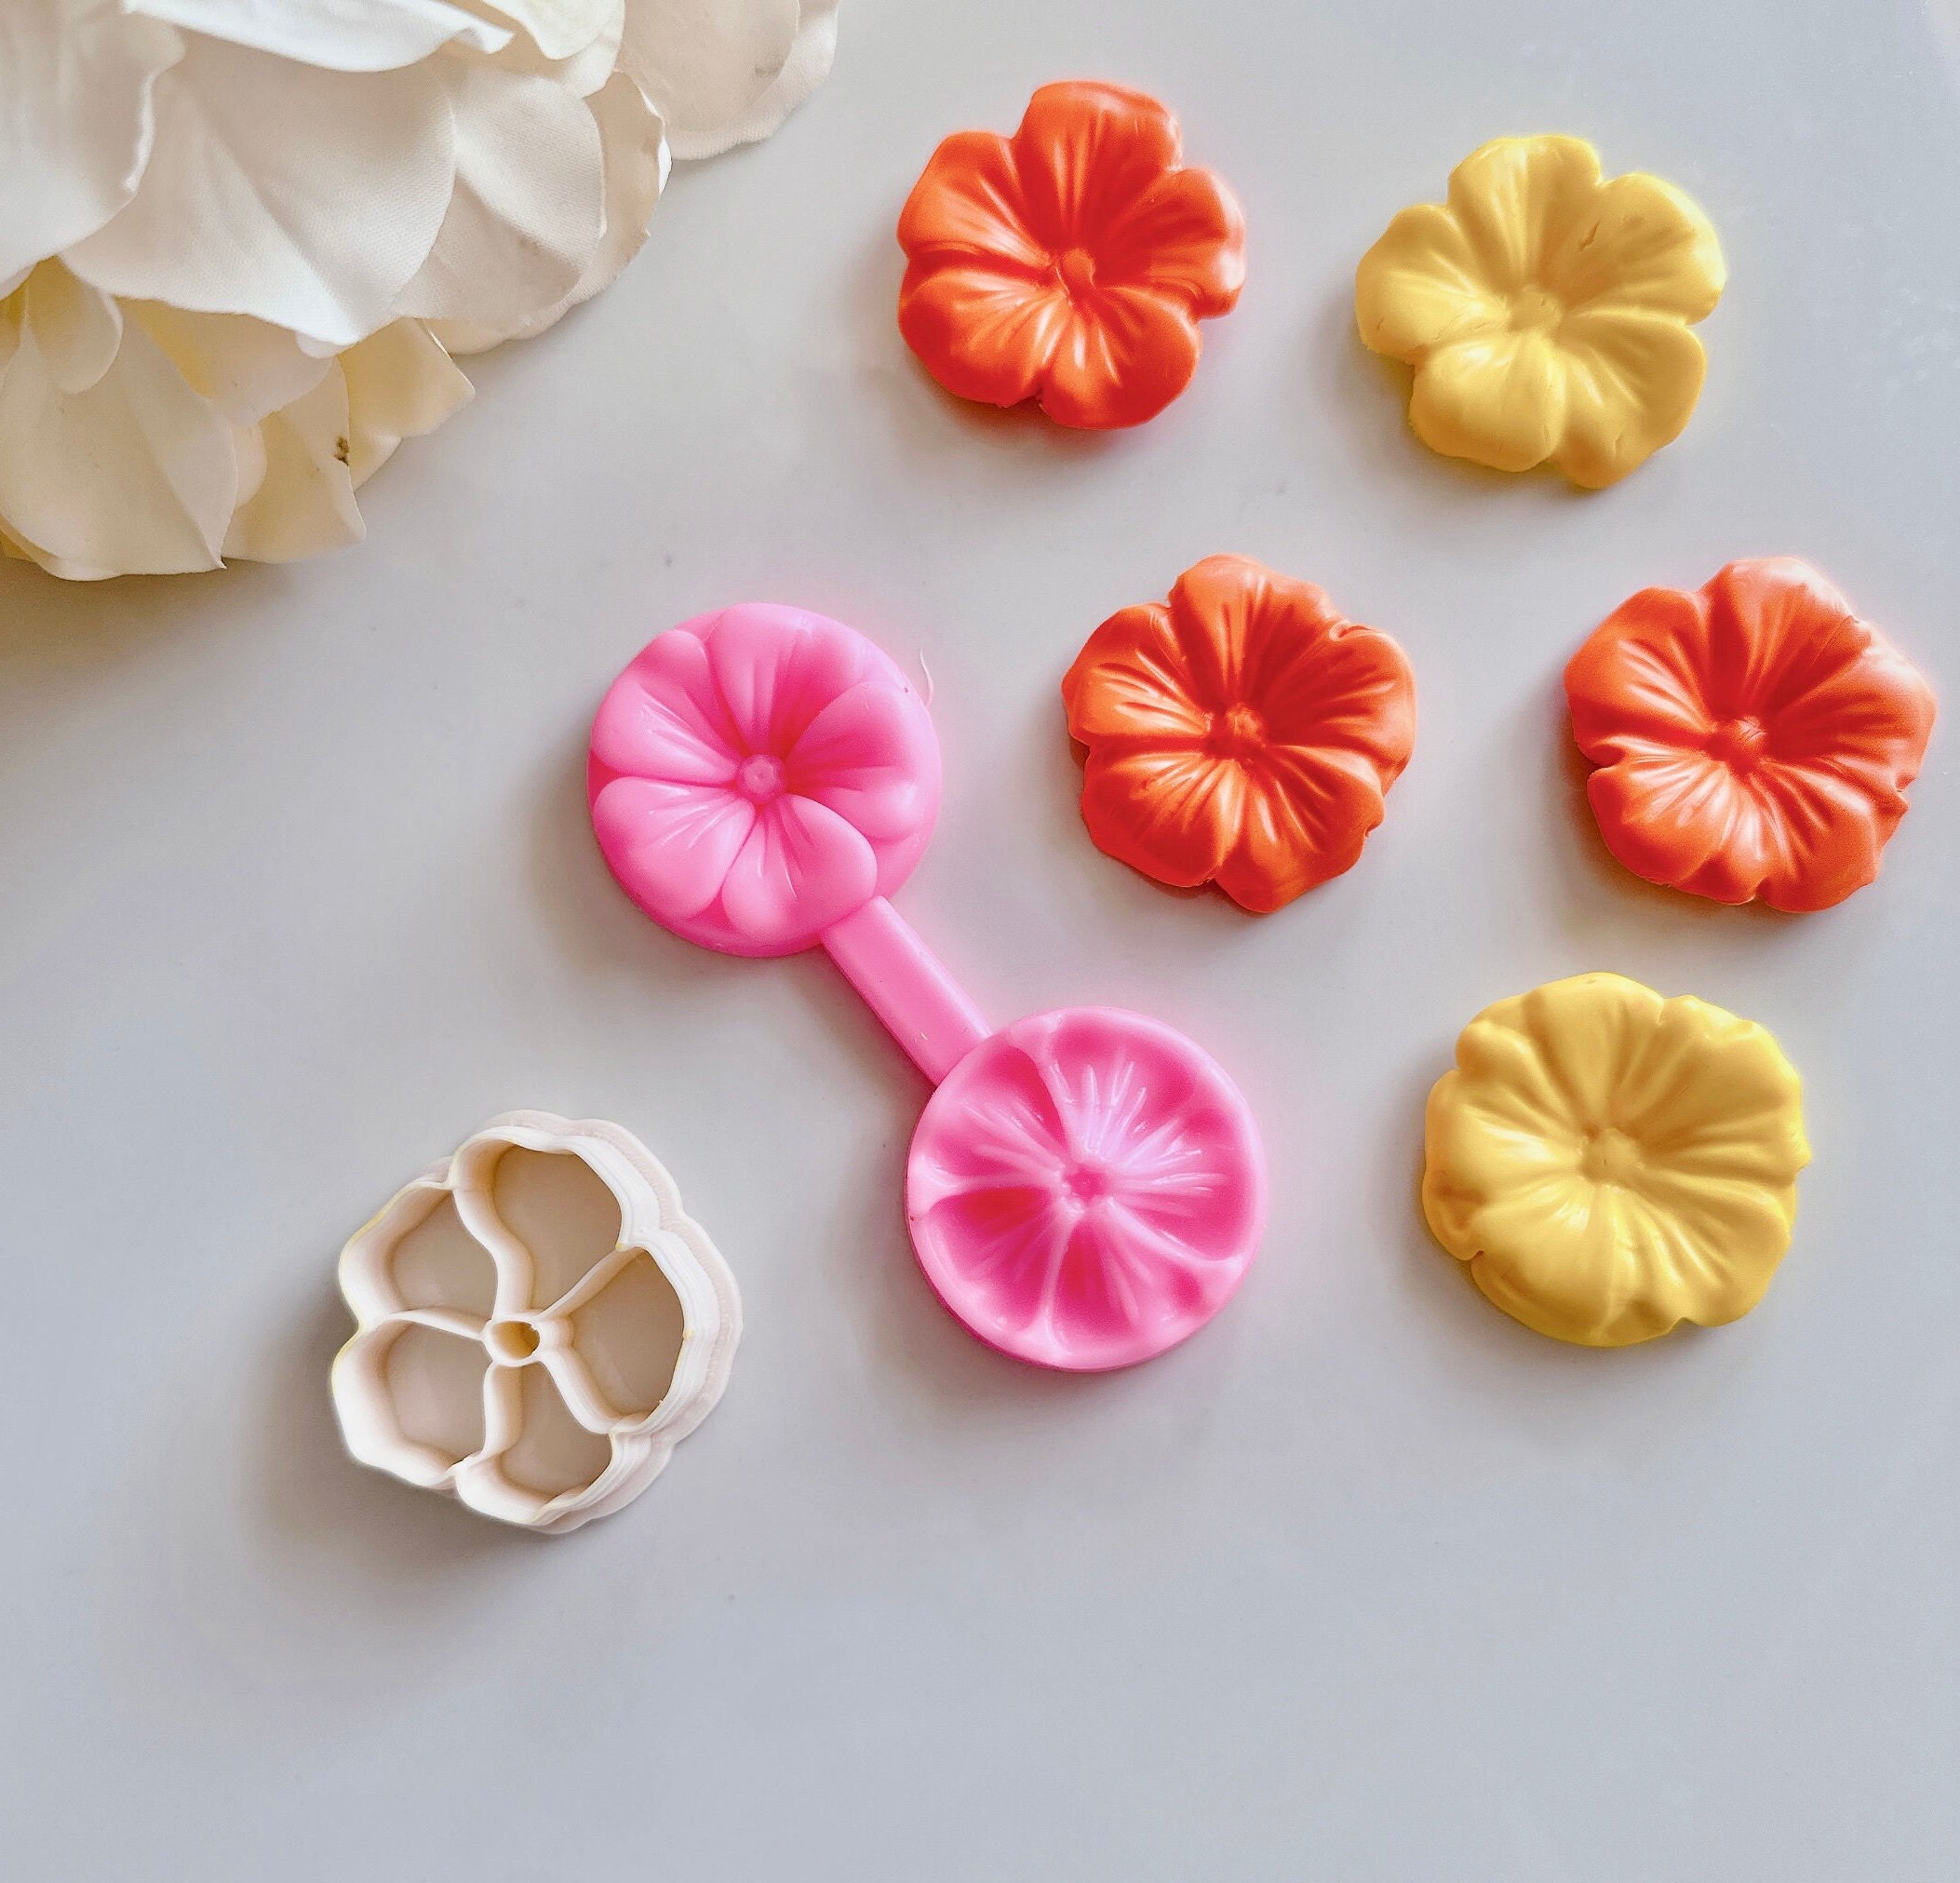 5 moldes de arcilla polimérica de flores, mini molde de silicona de arcilla  polimérica, cortadores de arcilla polimérica en forma de flor de rosa para